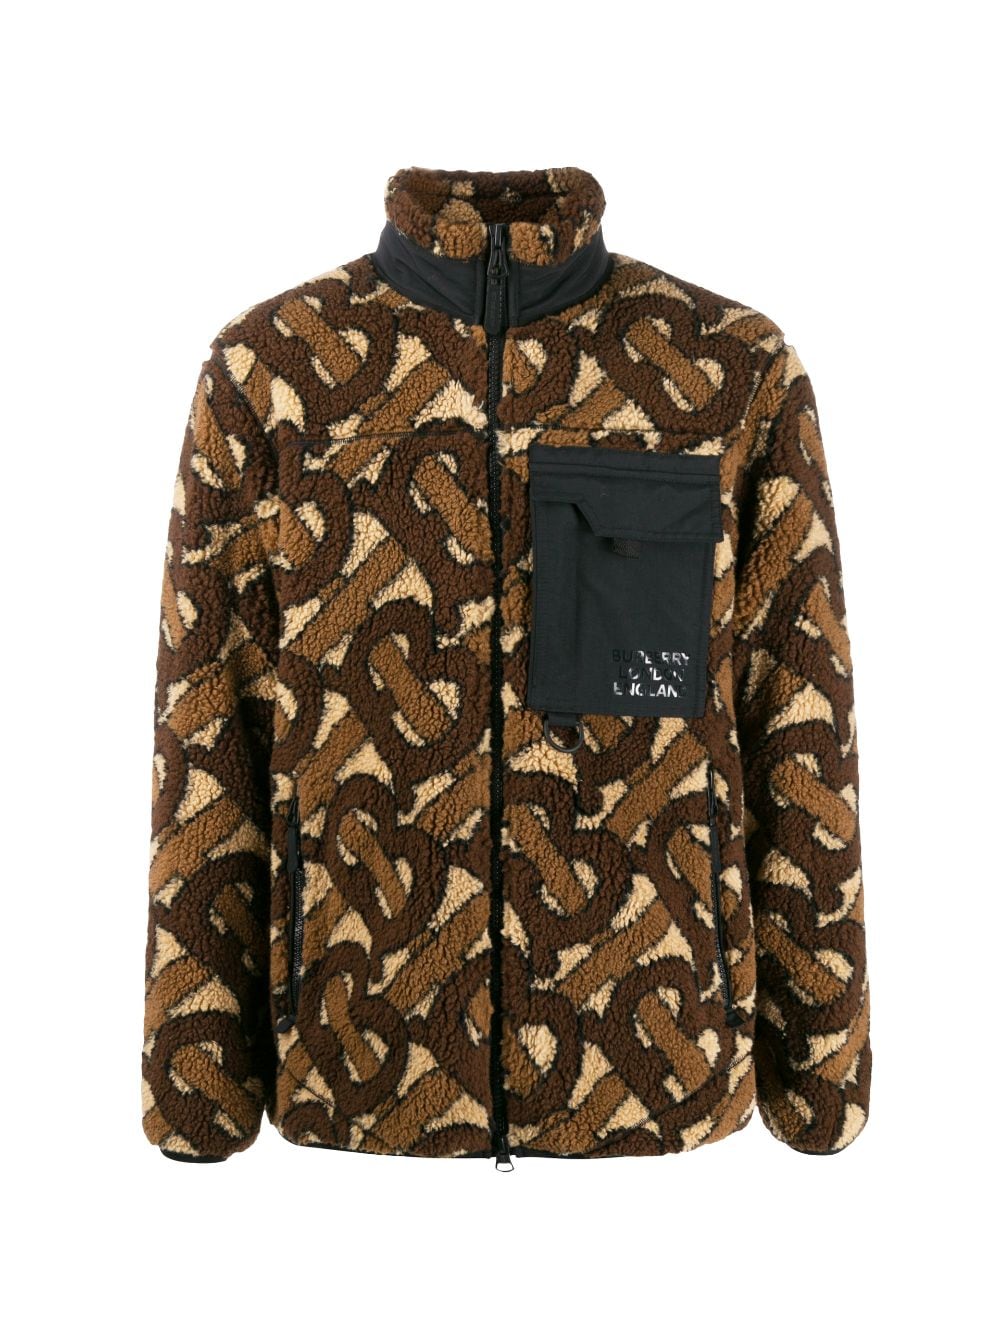 Monogram Fleece Jacquard Jacket, Burberry